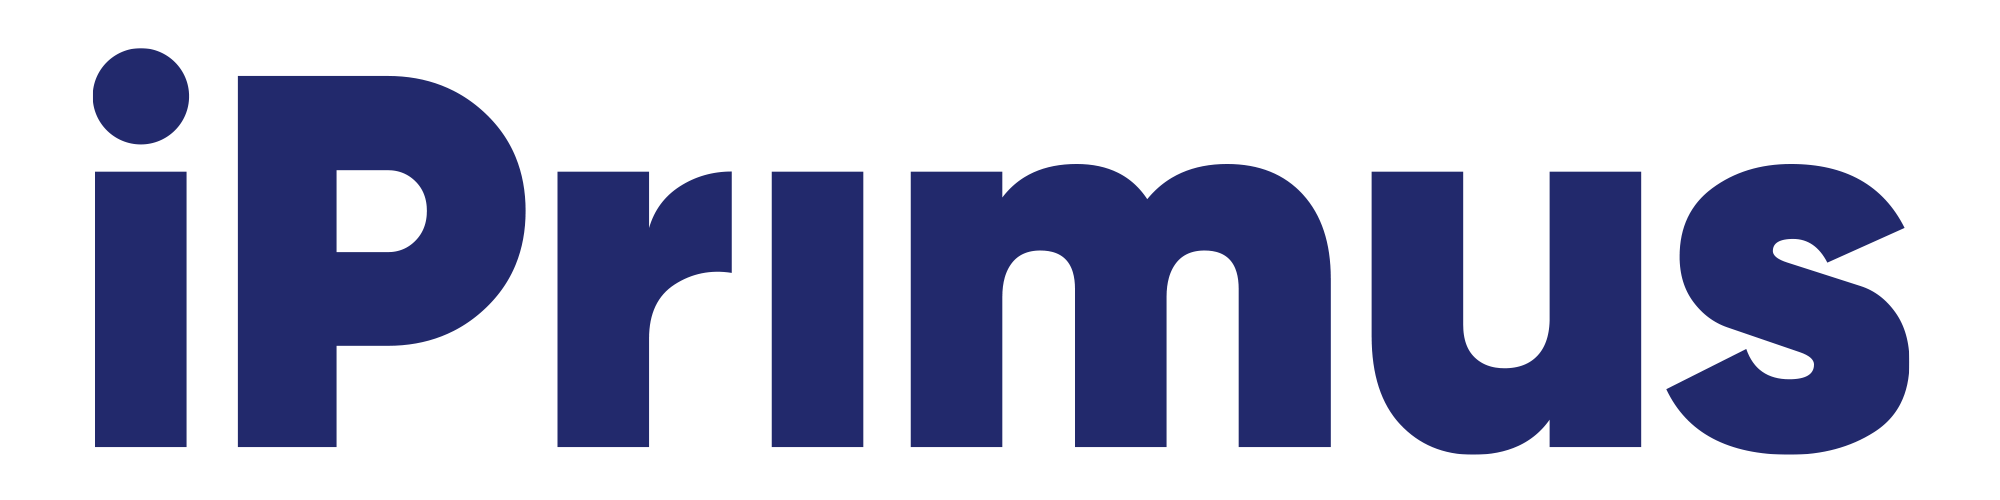 iPrimus broadband provider logo